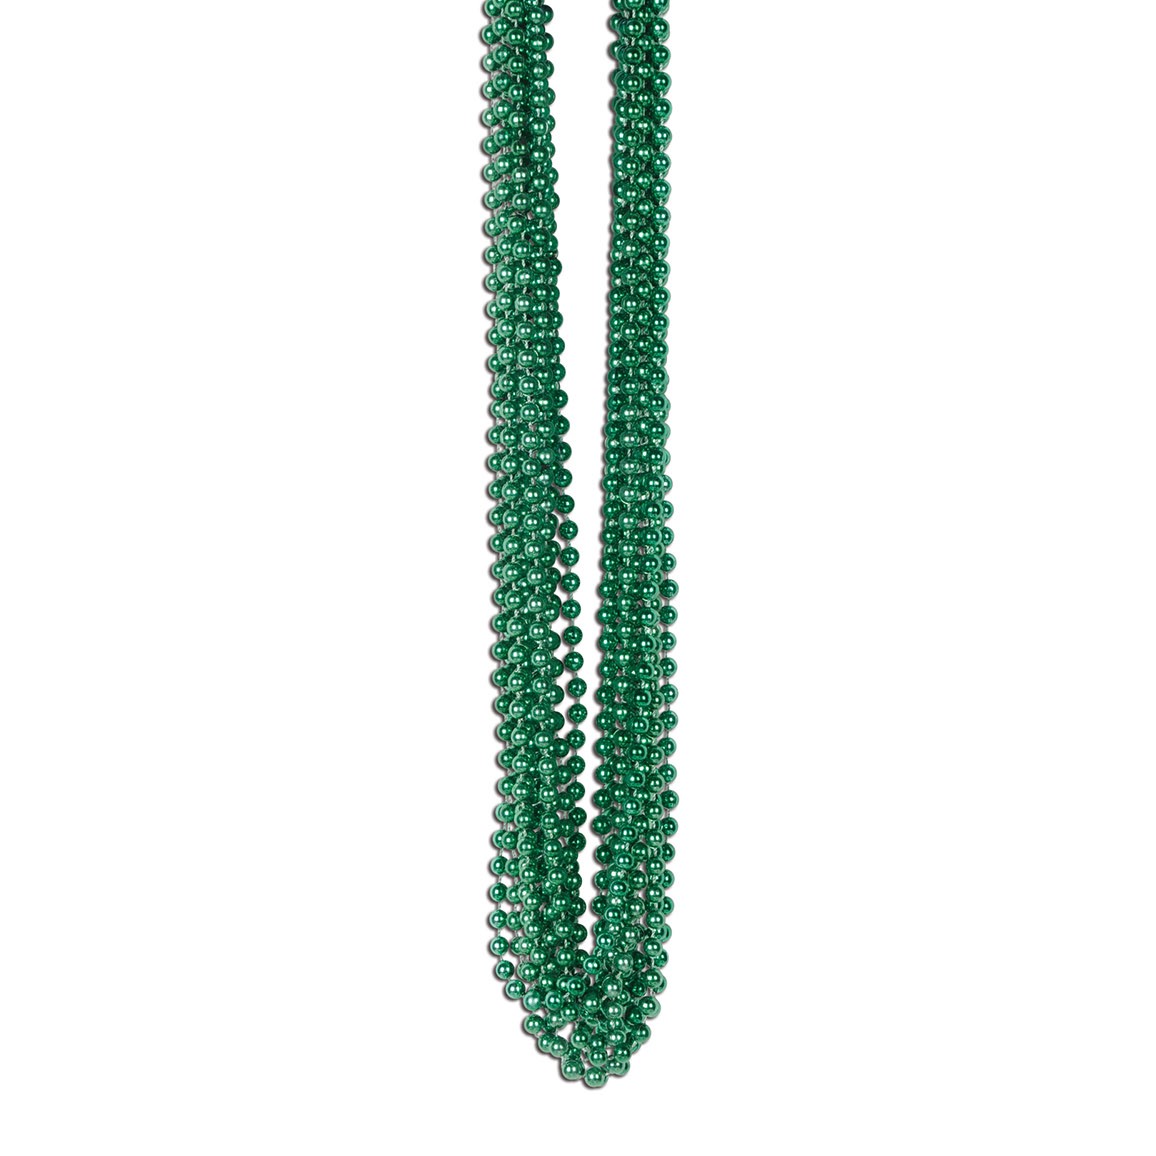 Green Small Round Beads